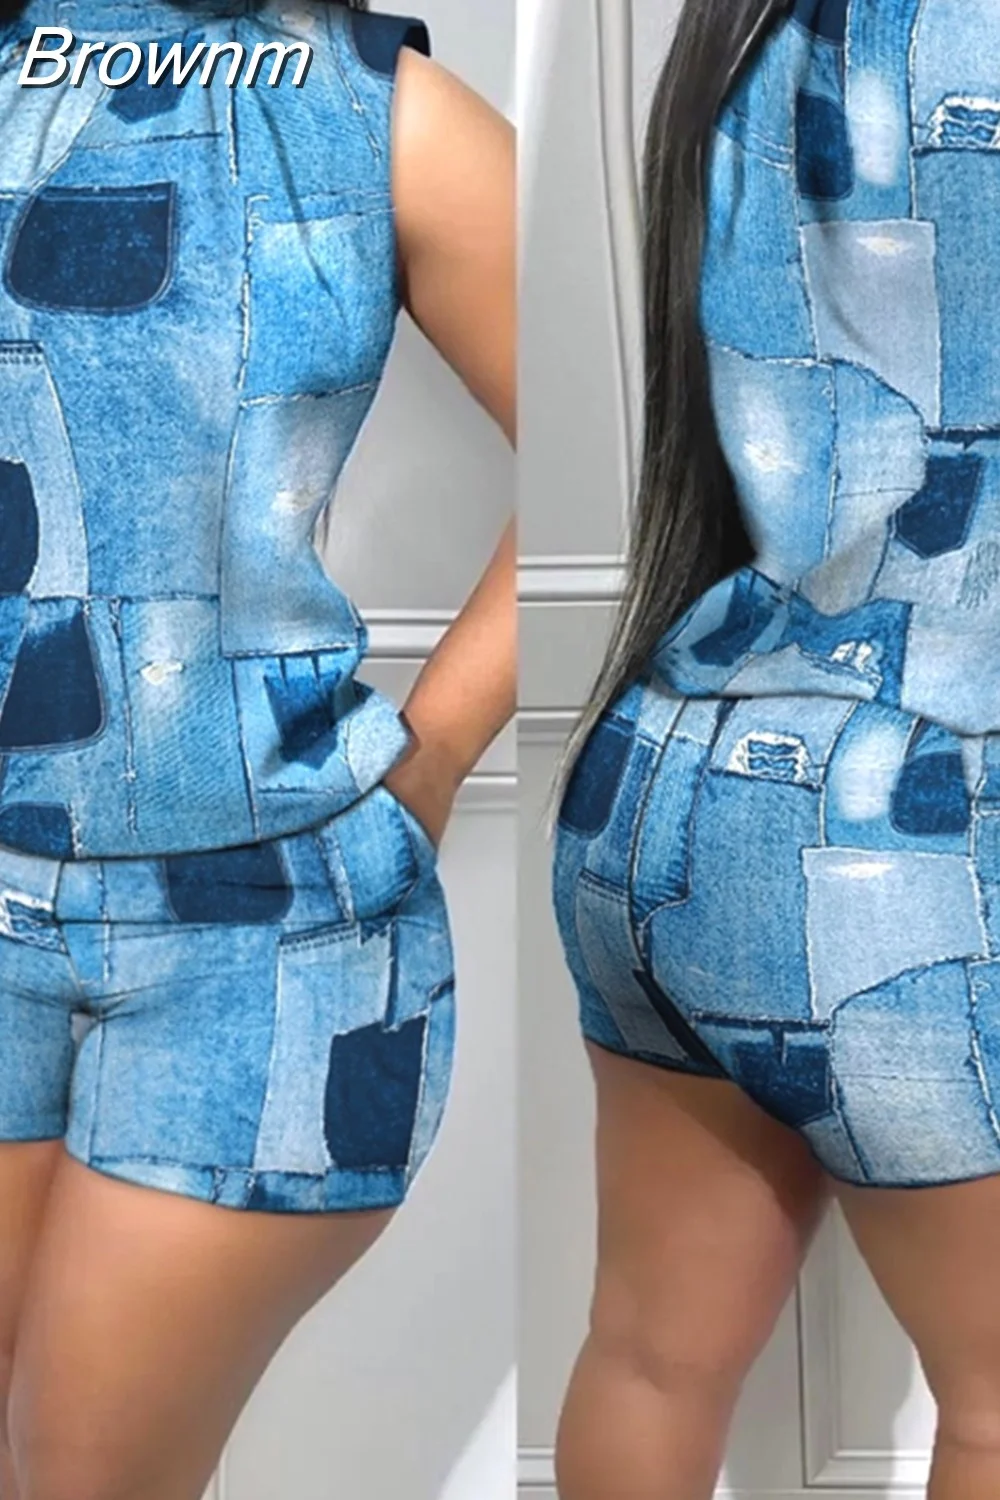 Brownm Piece Sets Womens Outifits Summer Fashion Denim Look Print Casual Mock Neck Sleeveless Tank Top & Pocket Design Shorts Set